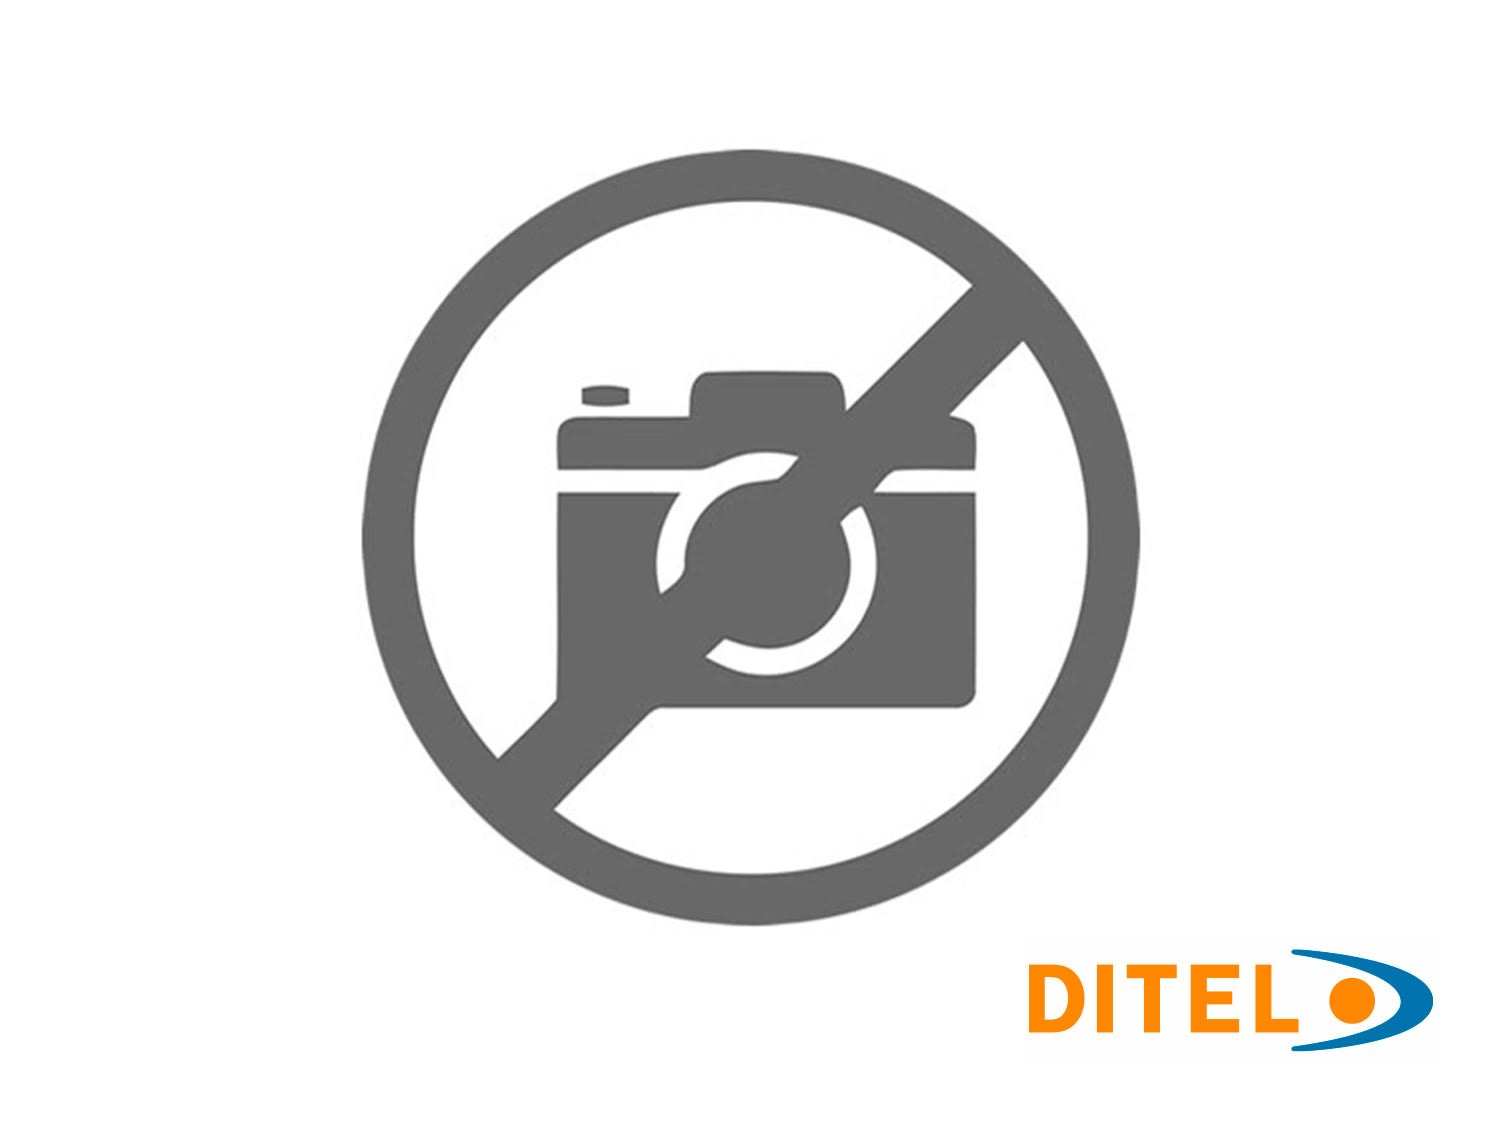 Ditel - Afficheur Numerique 100mm, 5 digits haute luminosite, Serie, Ethernet, Wifi +2R,